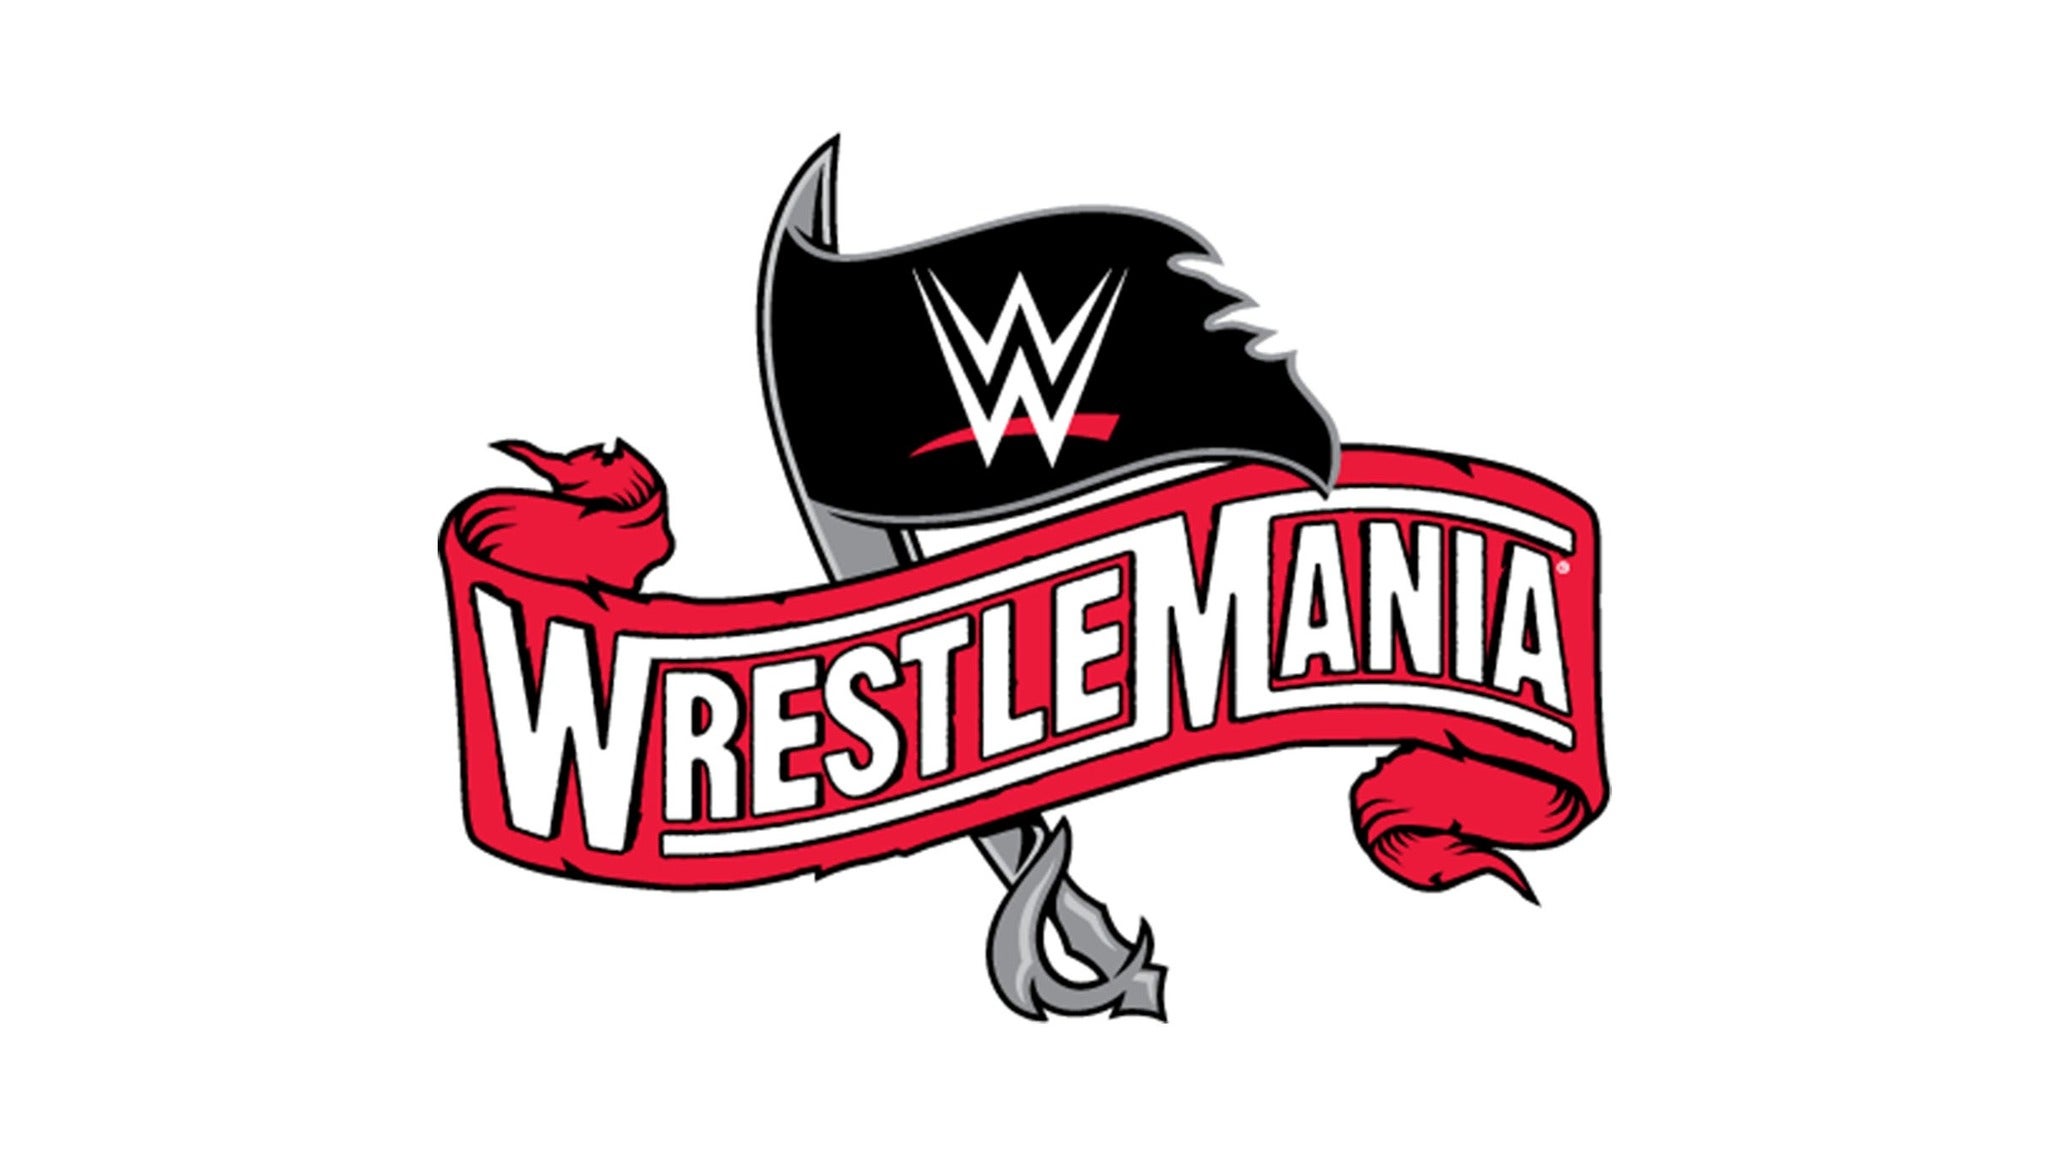 WWE WrestleMania Tickets Single Game Tickets & Schedule